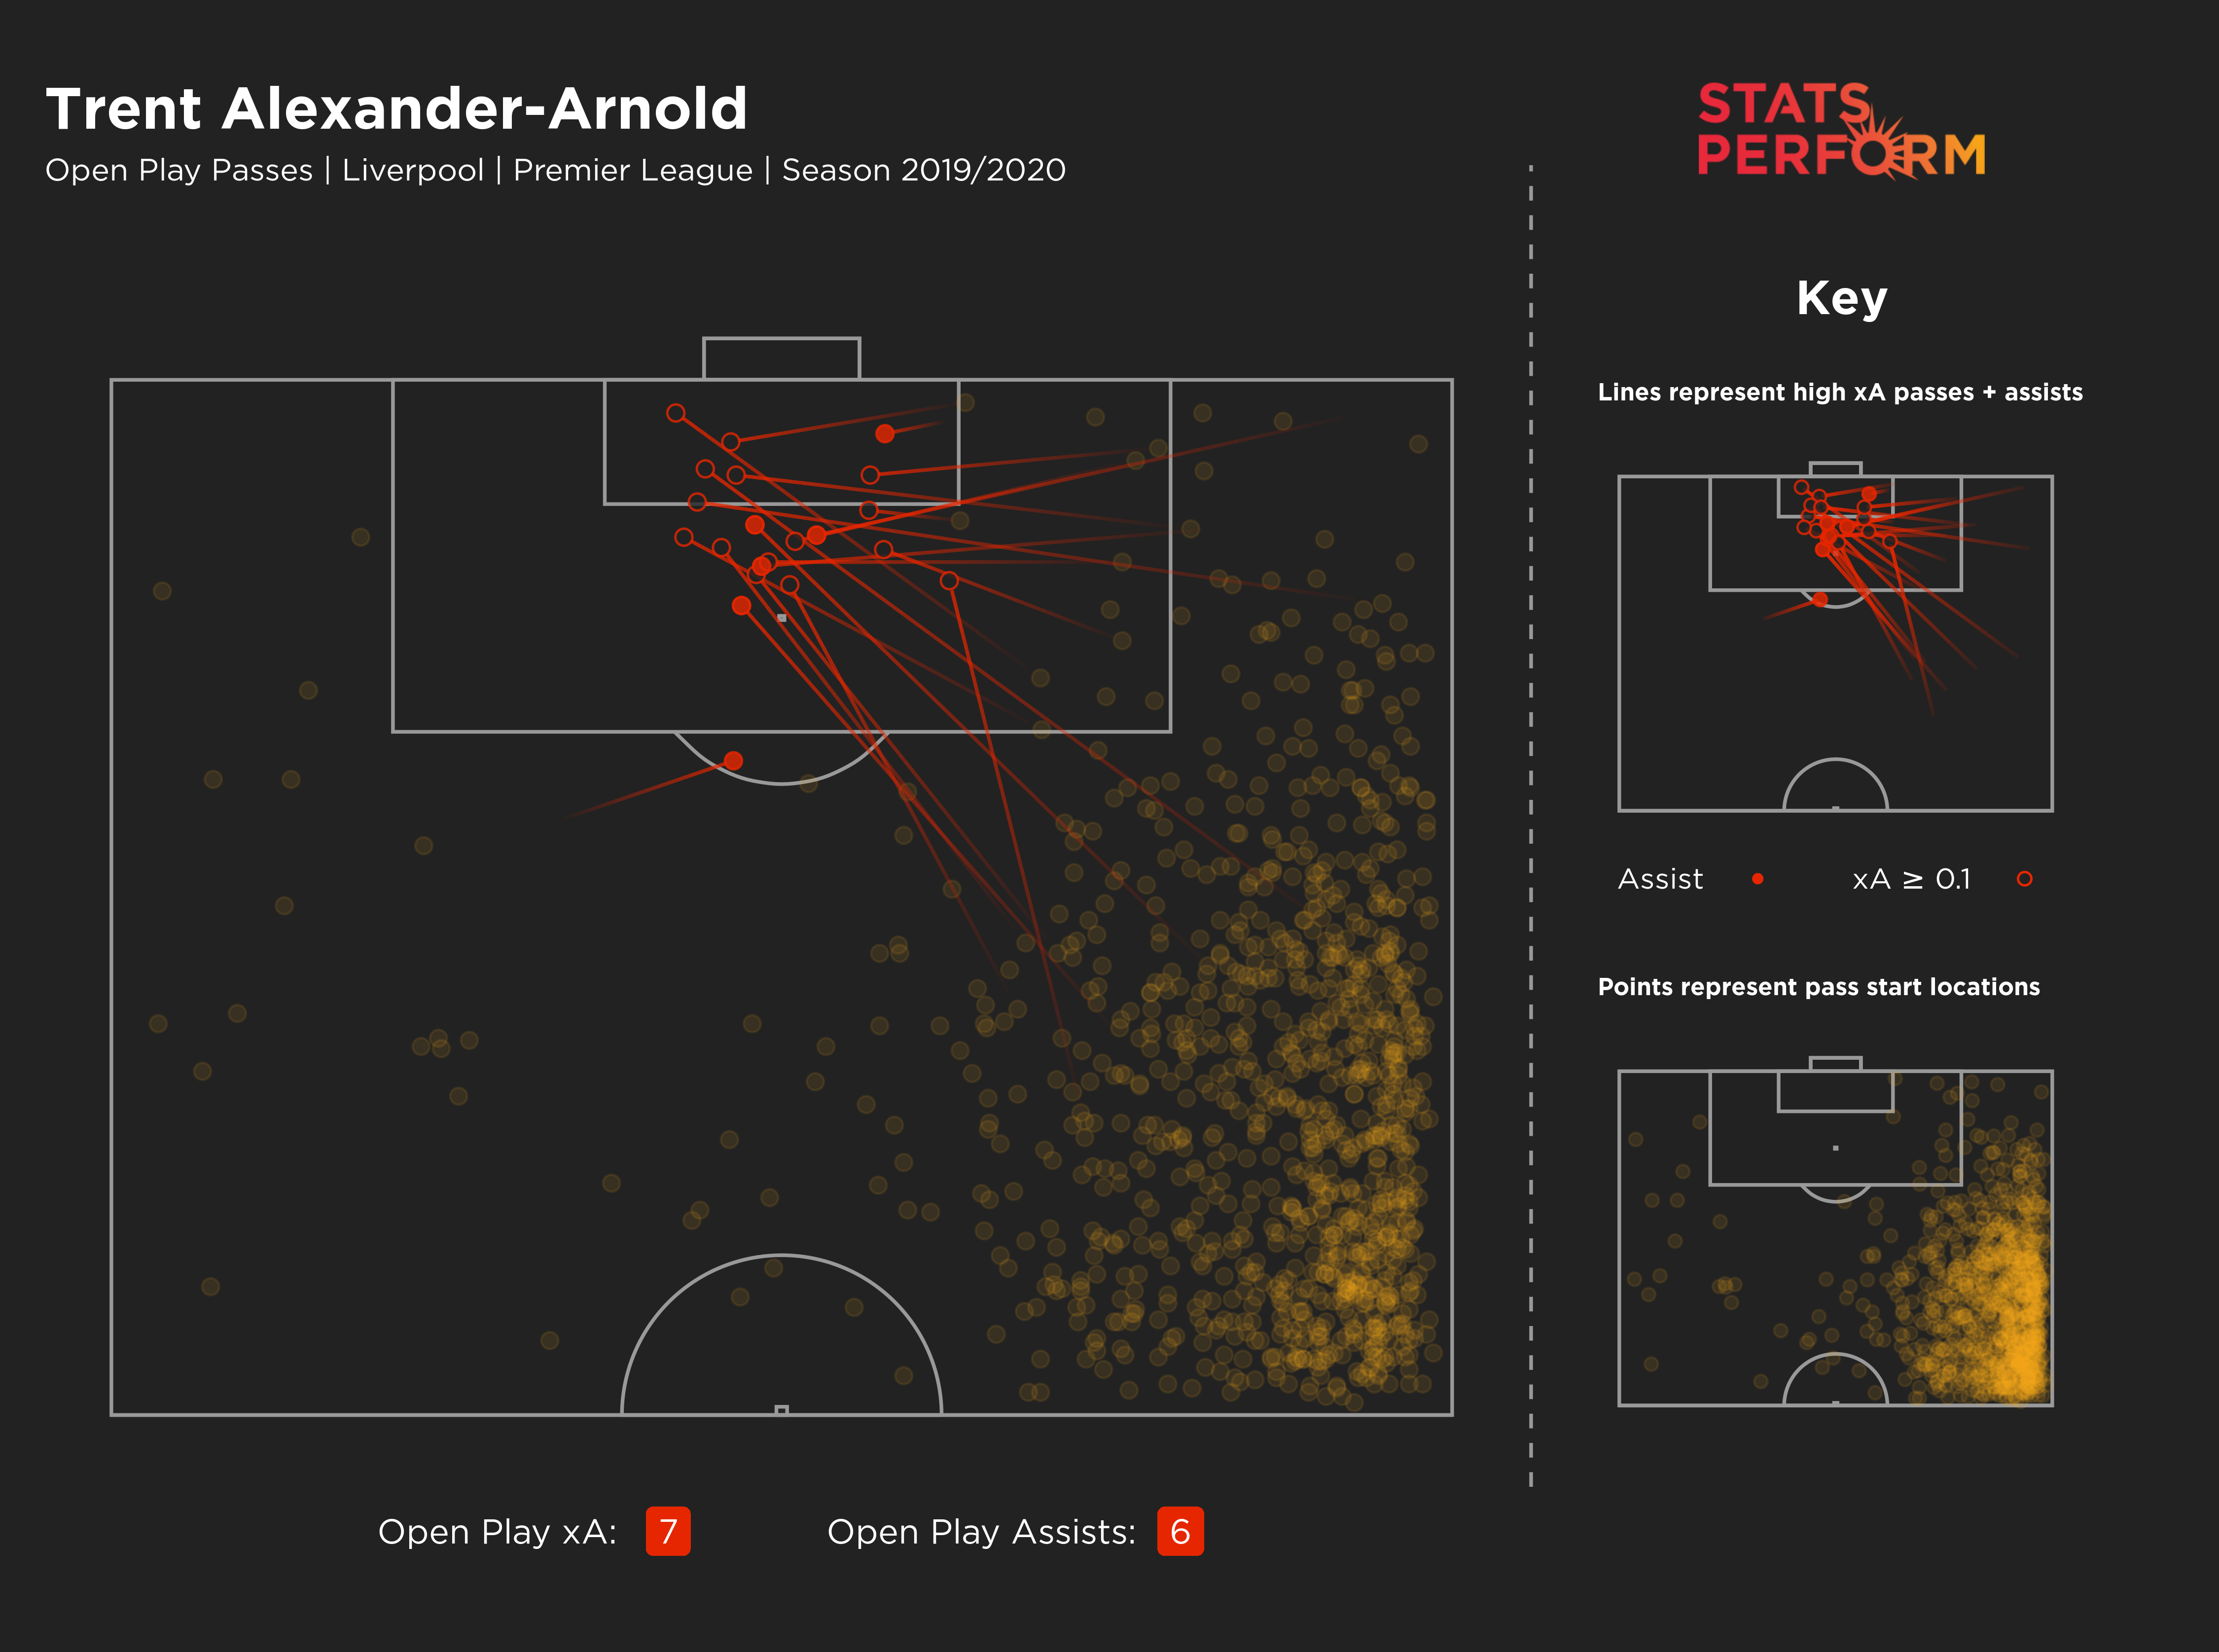 Trent Alexander-Arnold's assists map in the Premier League last season